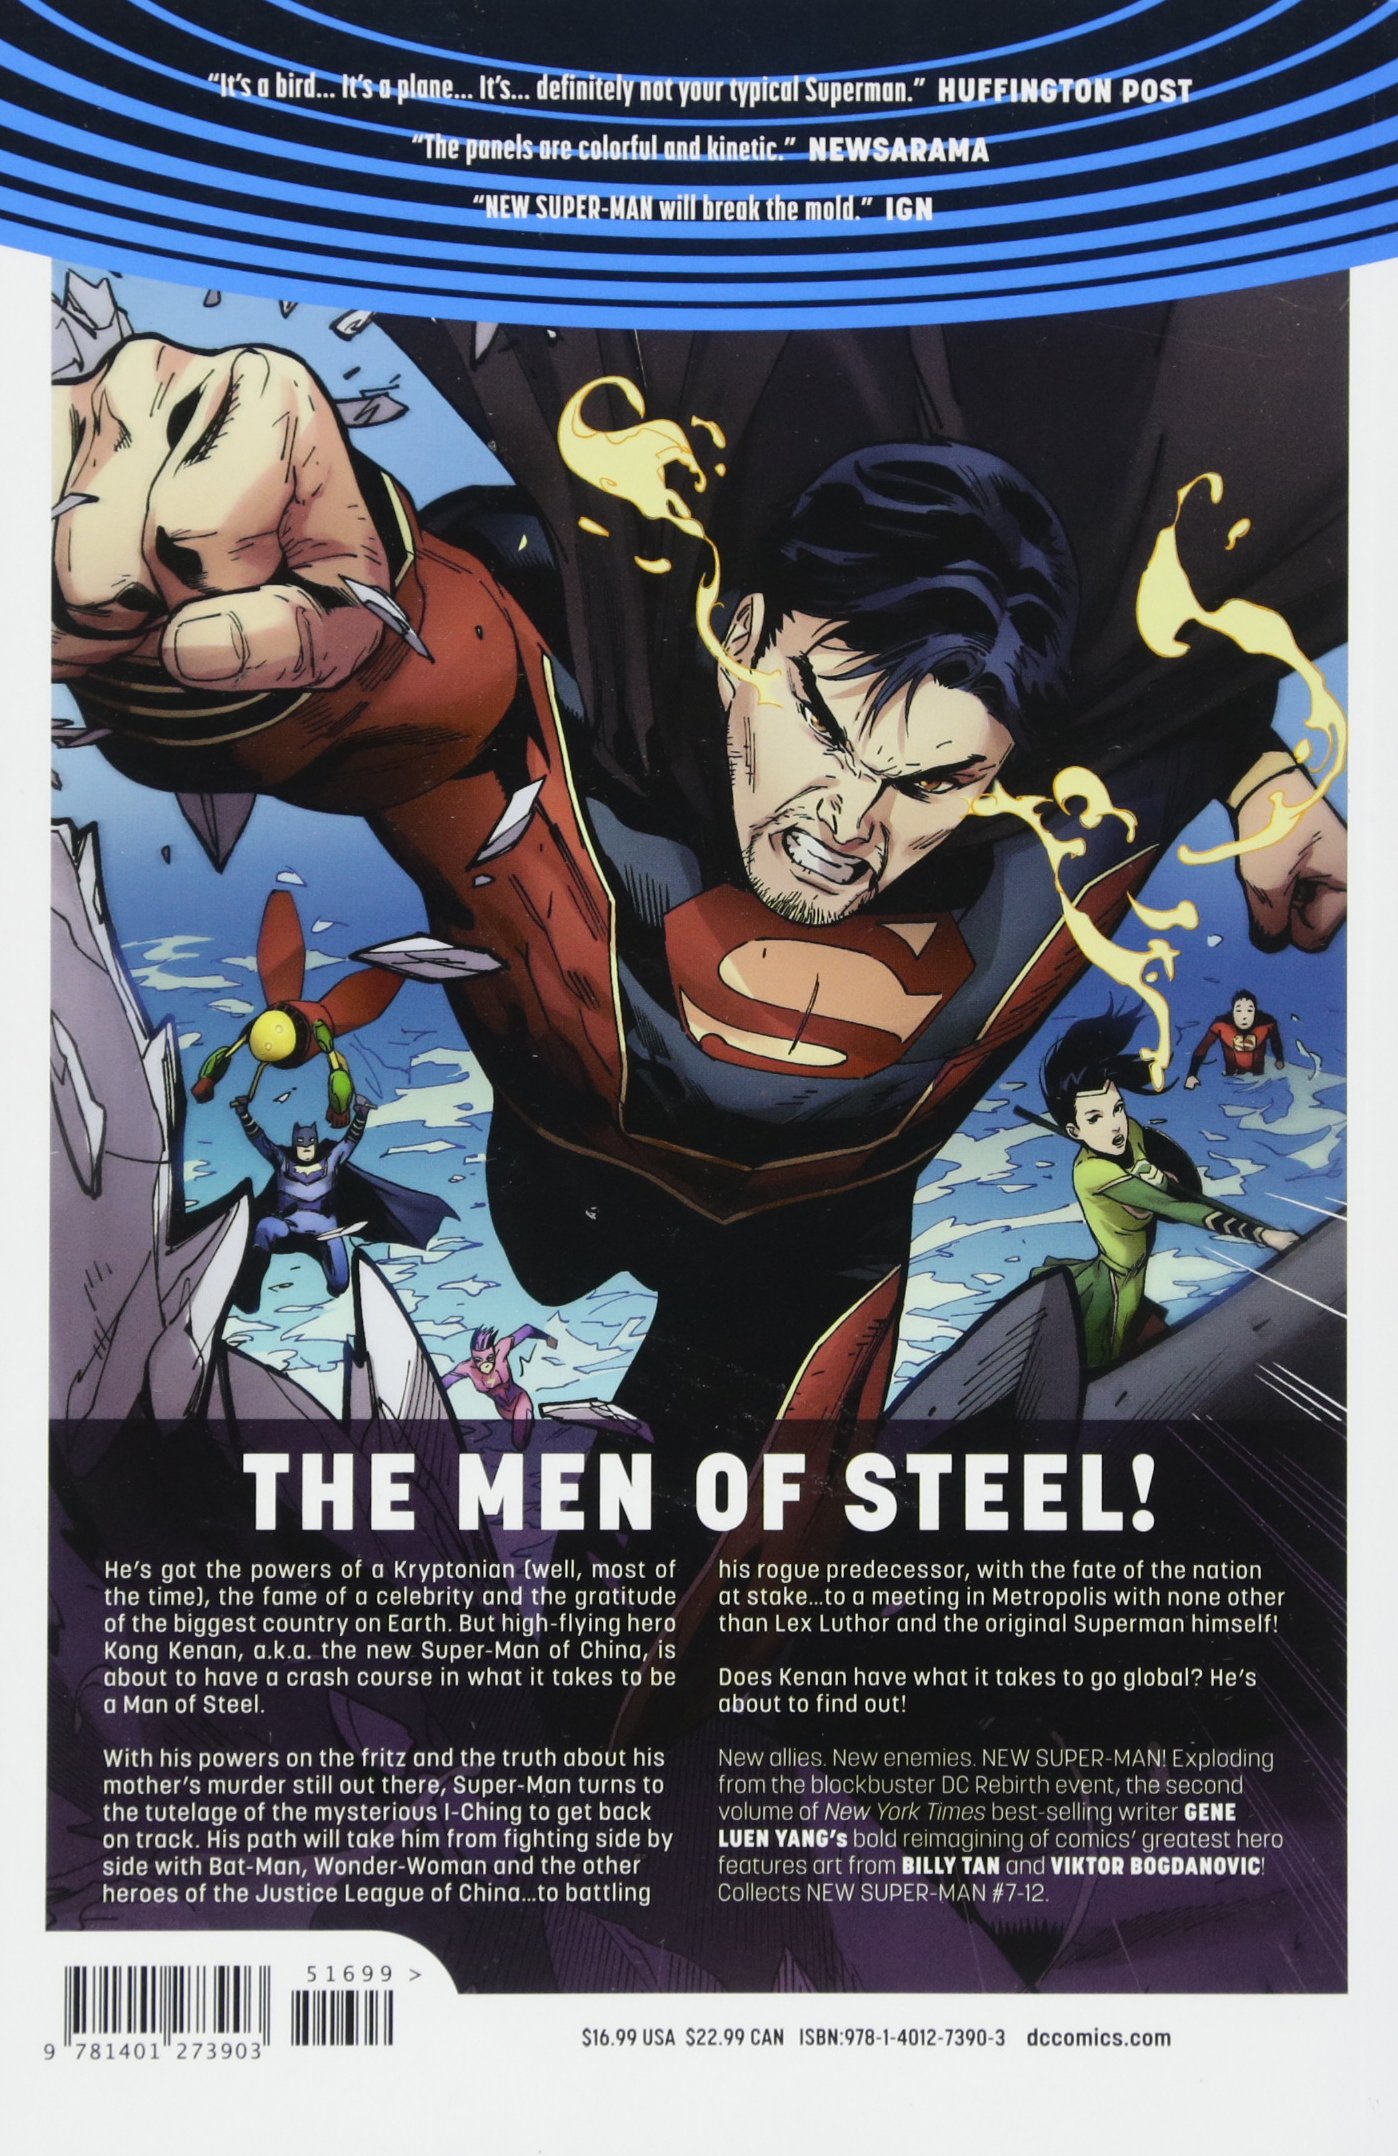 New Super-Man: Coming To America | Gene Luen Yang